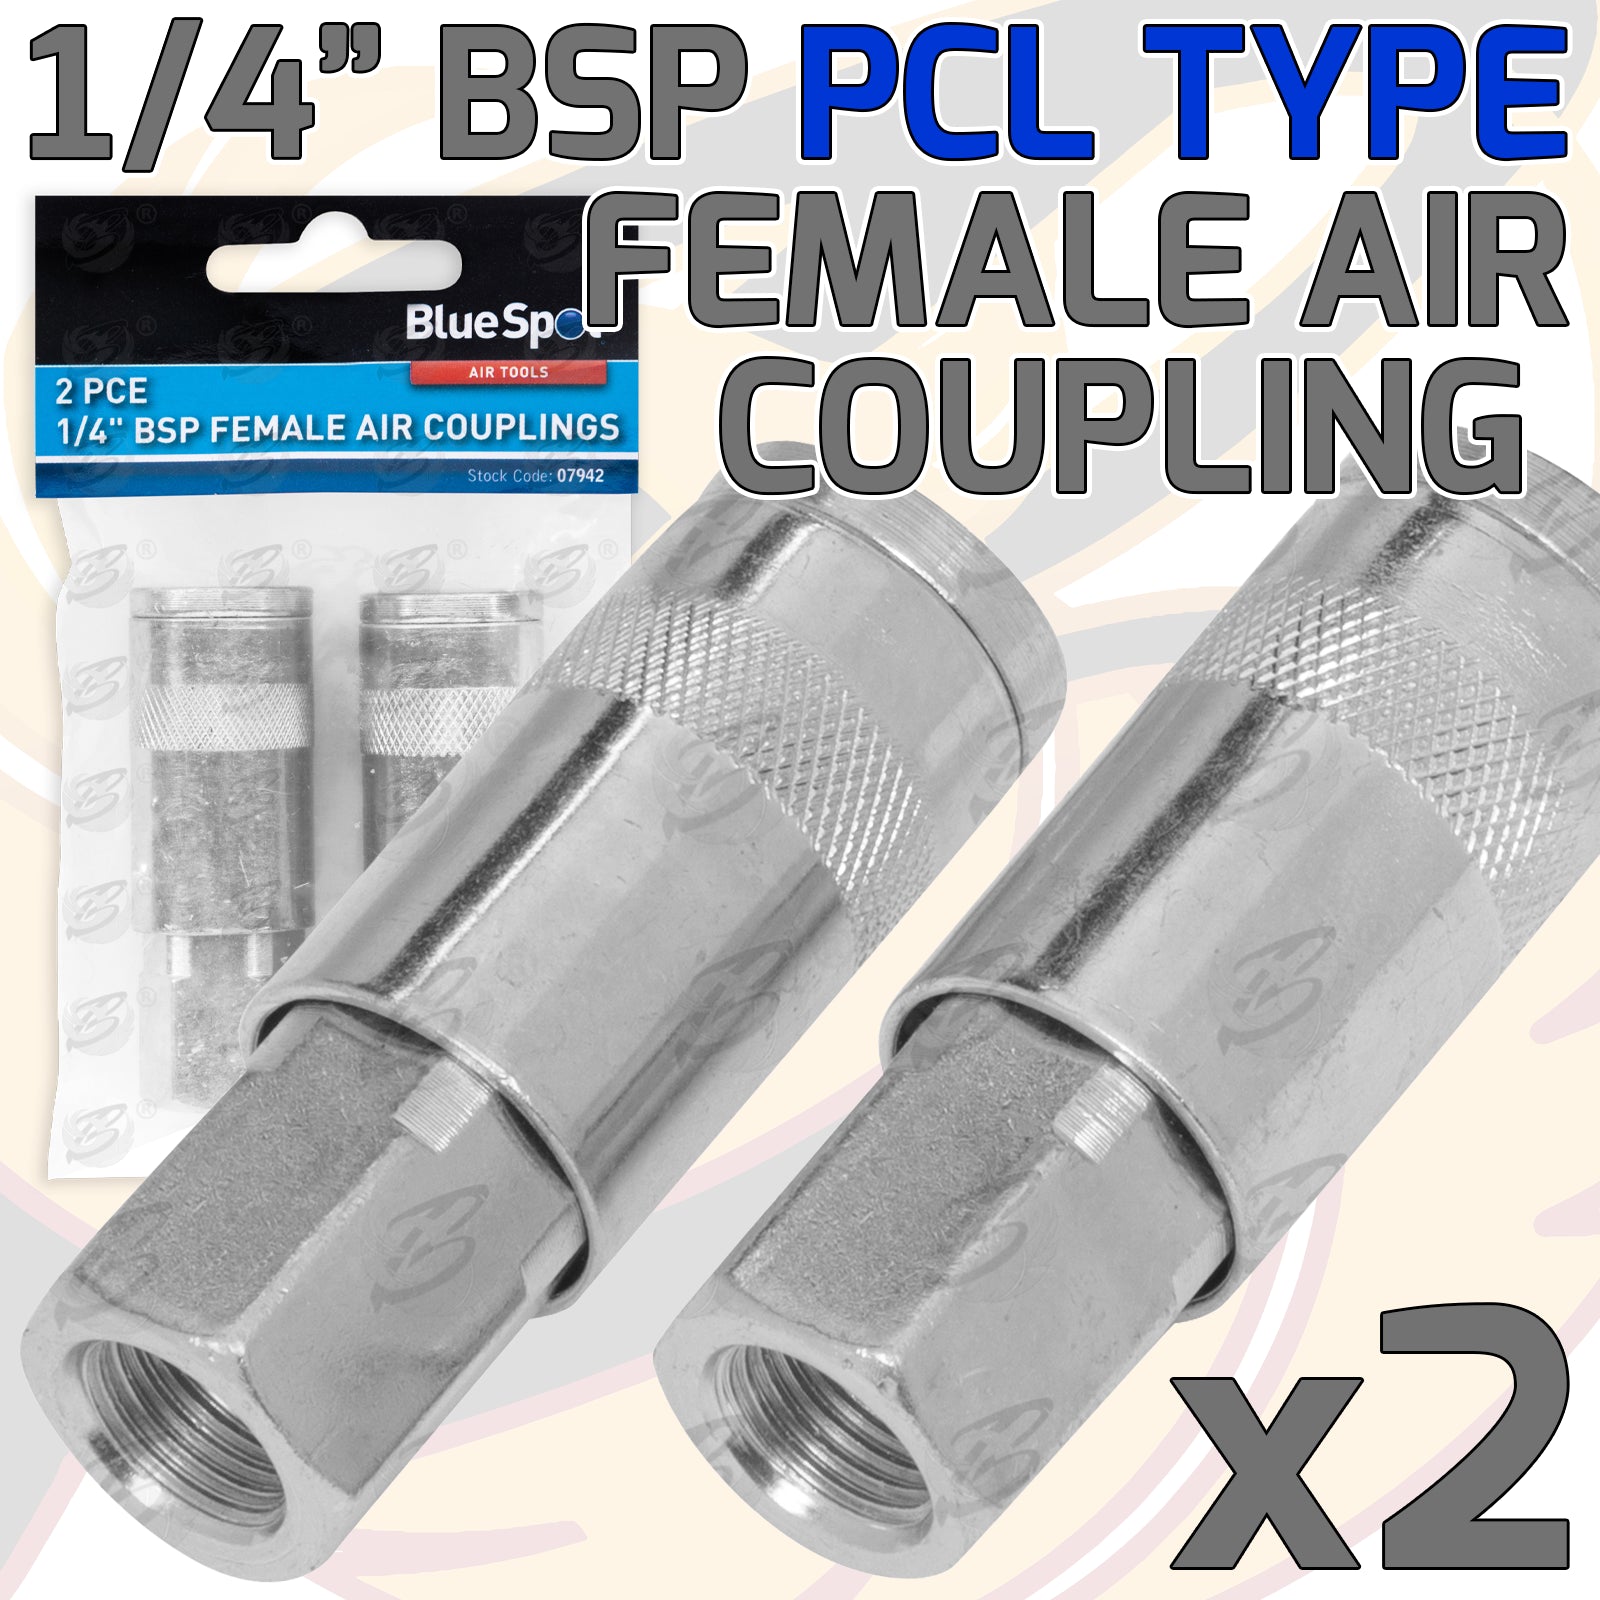 BLUESPOT 2PCS 1/4" BSP FEMALE ( PCL TYPE ) AIR COUPLINGS